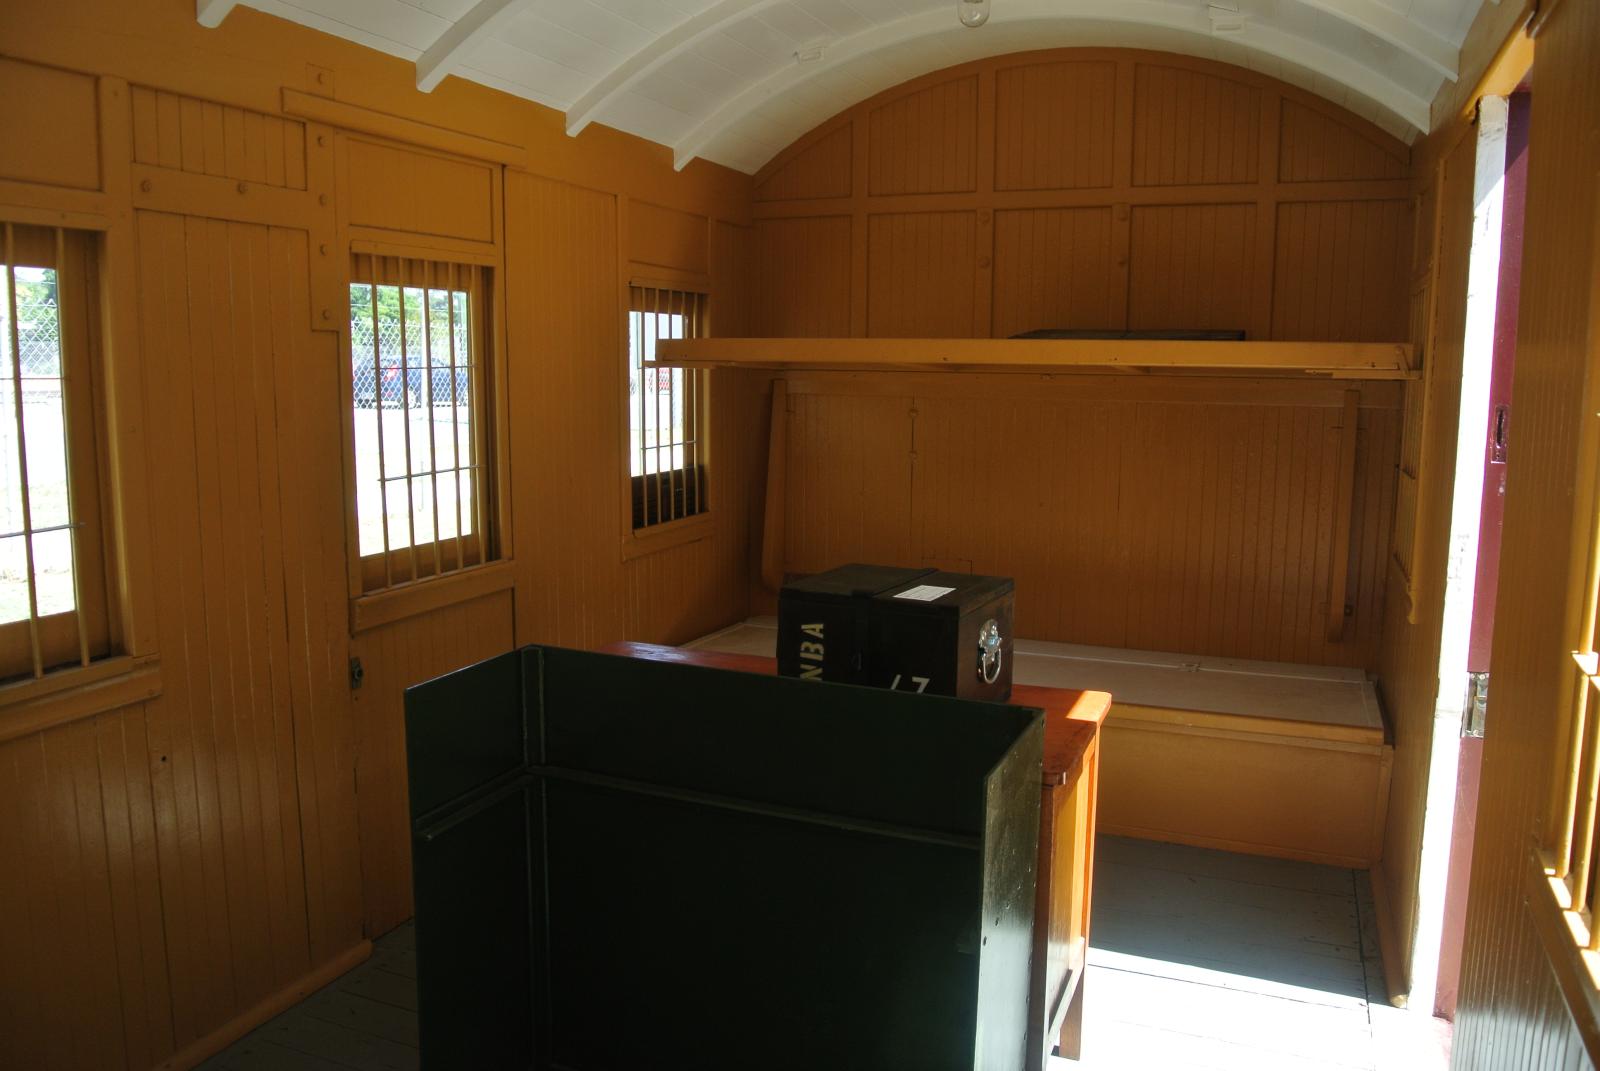 Internal view of Bullion Van showing bunks where bank officers slept